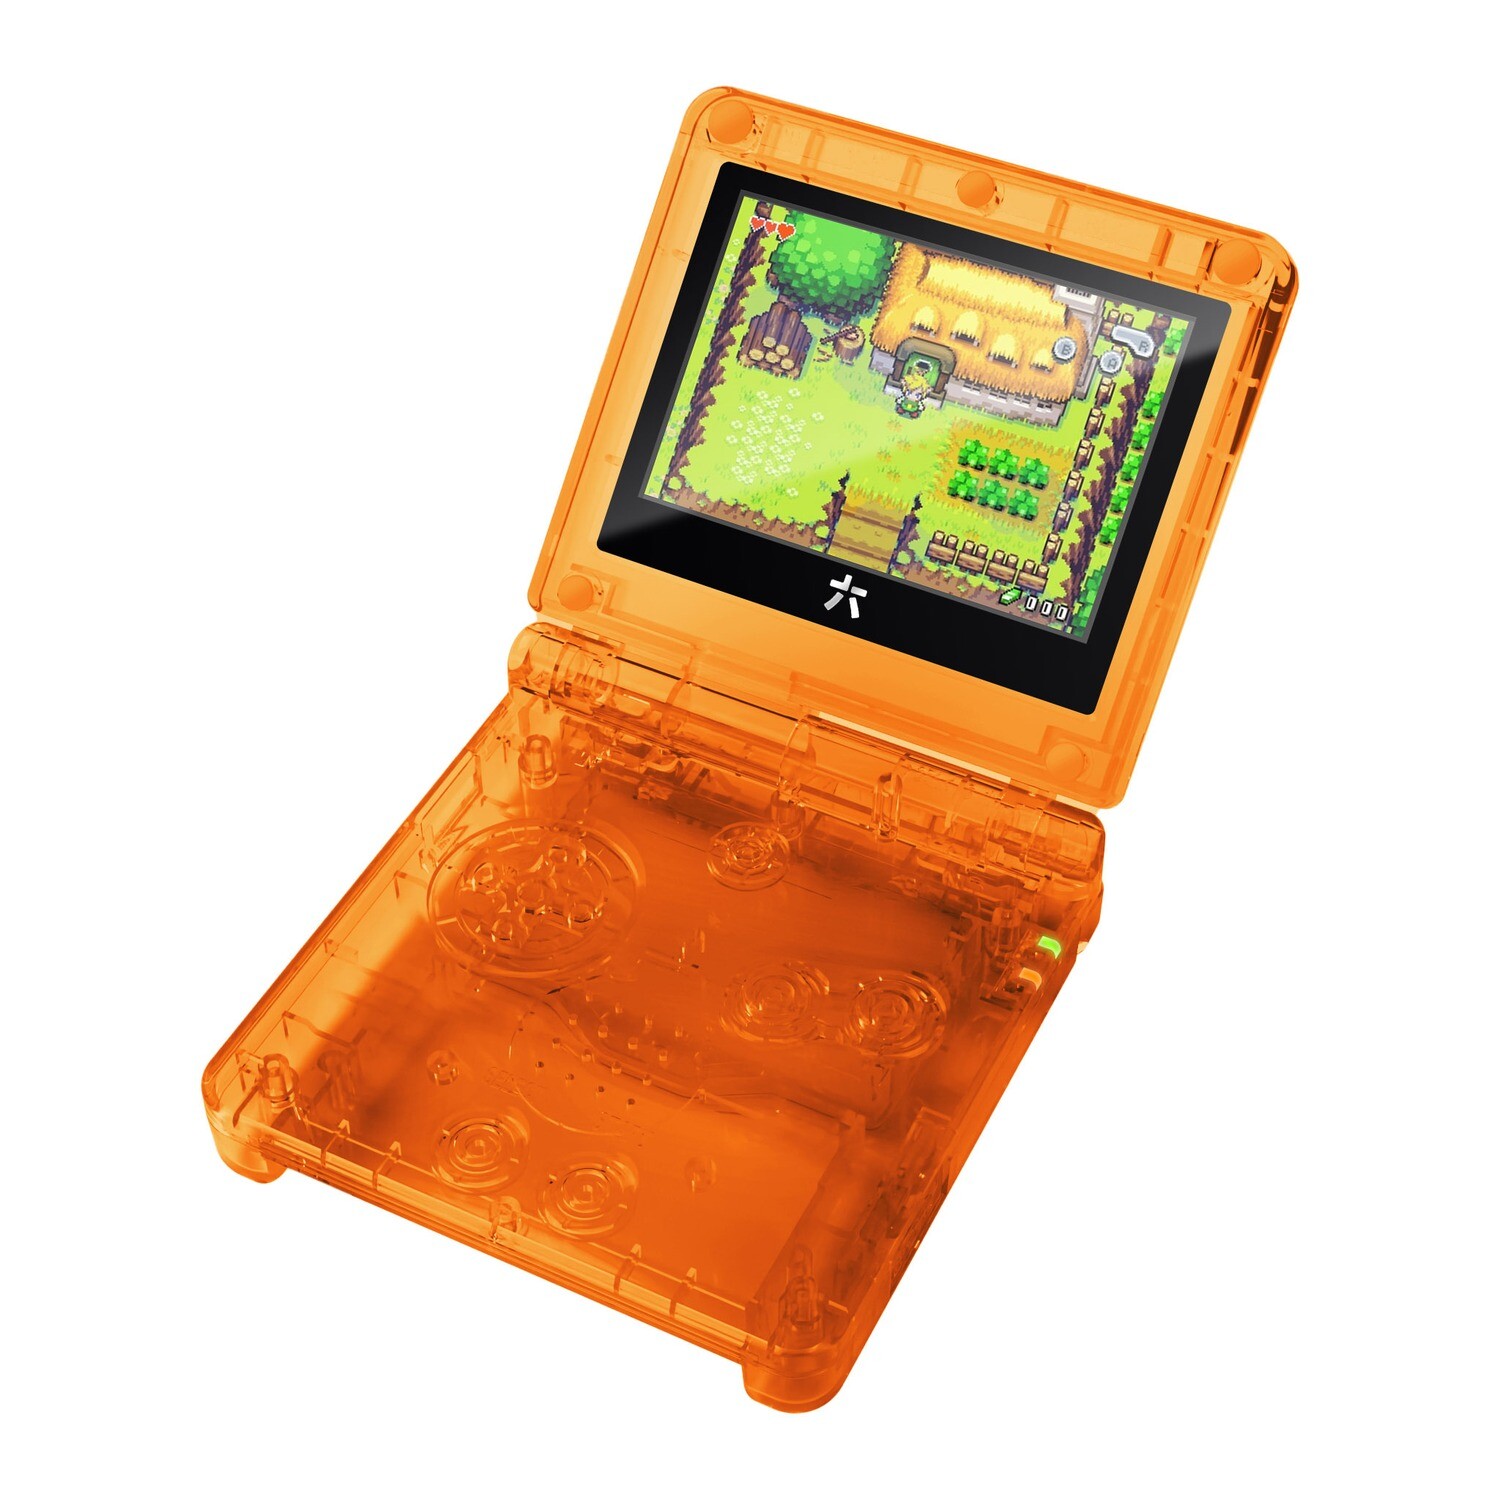 Game Boy Advance SP Console: Prestige Edition (Amber)